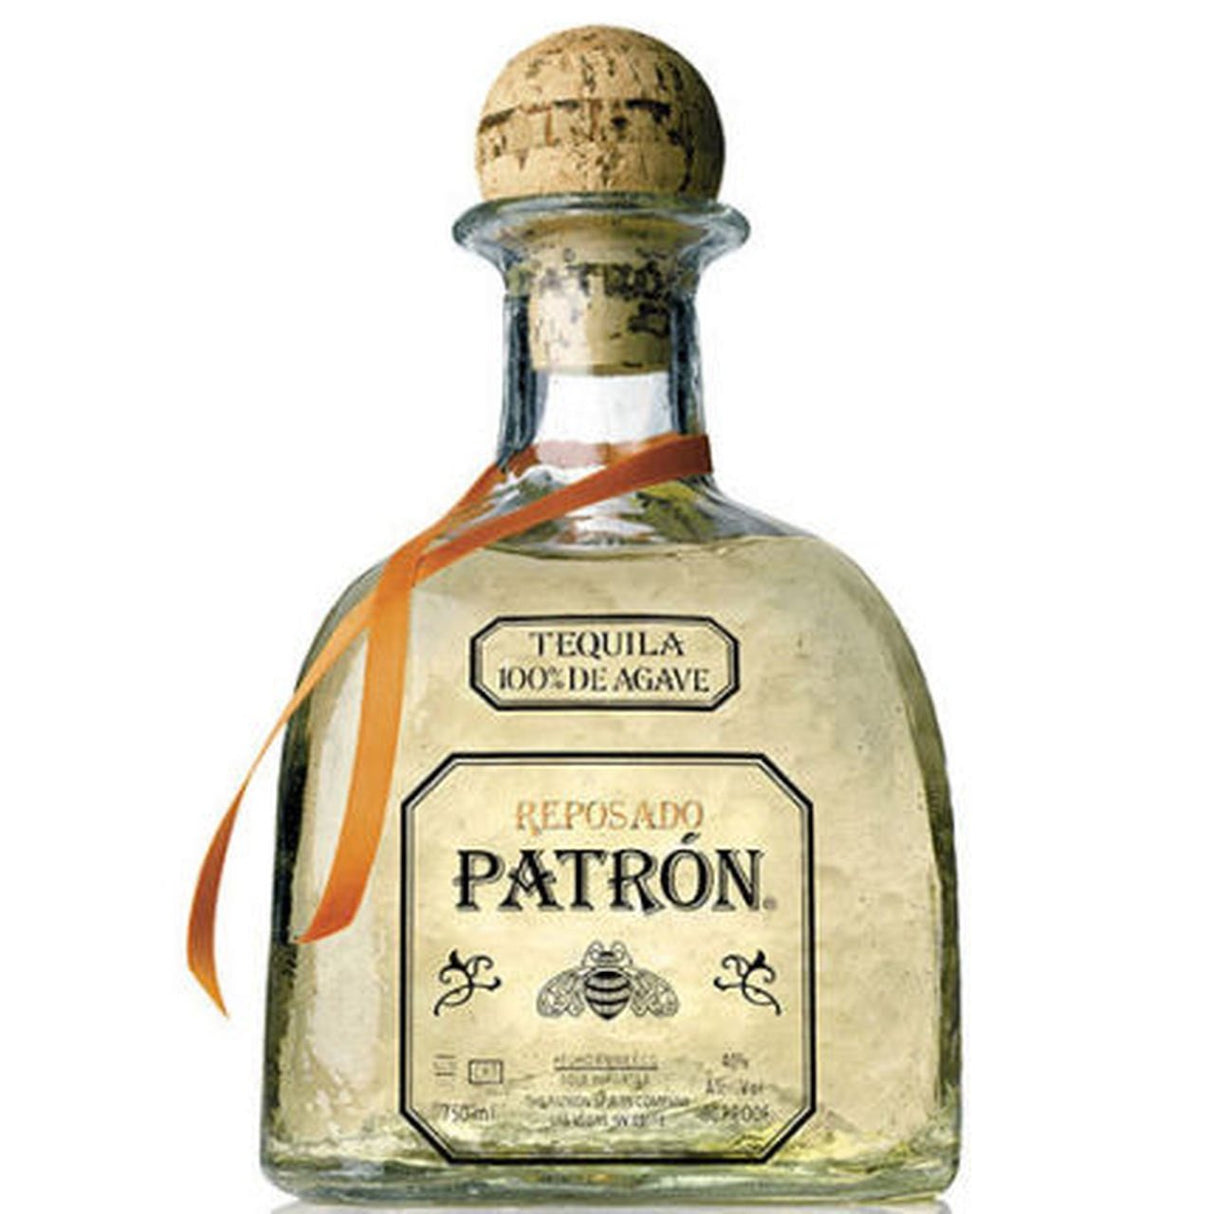 La Gritona Reposado Tequila — Bitters & Bottles